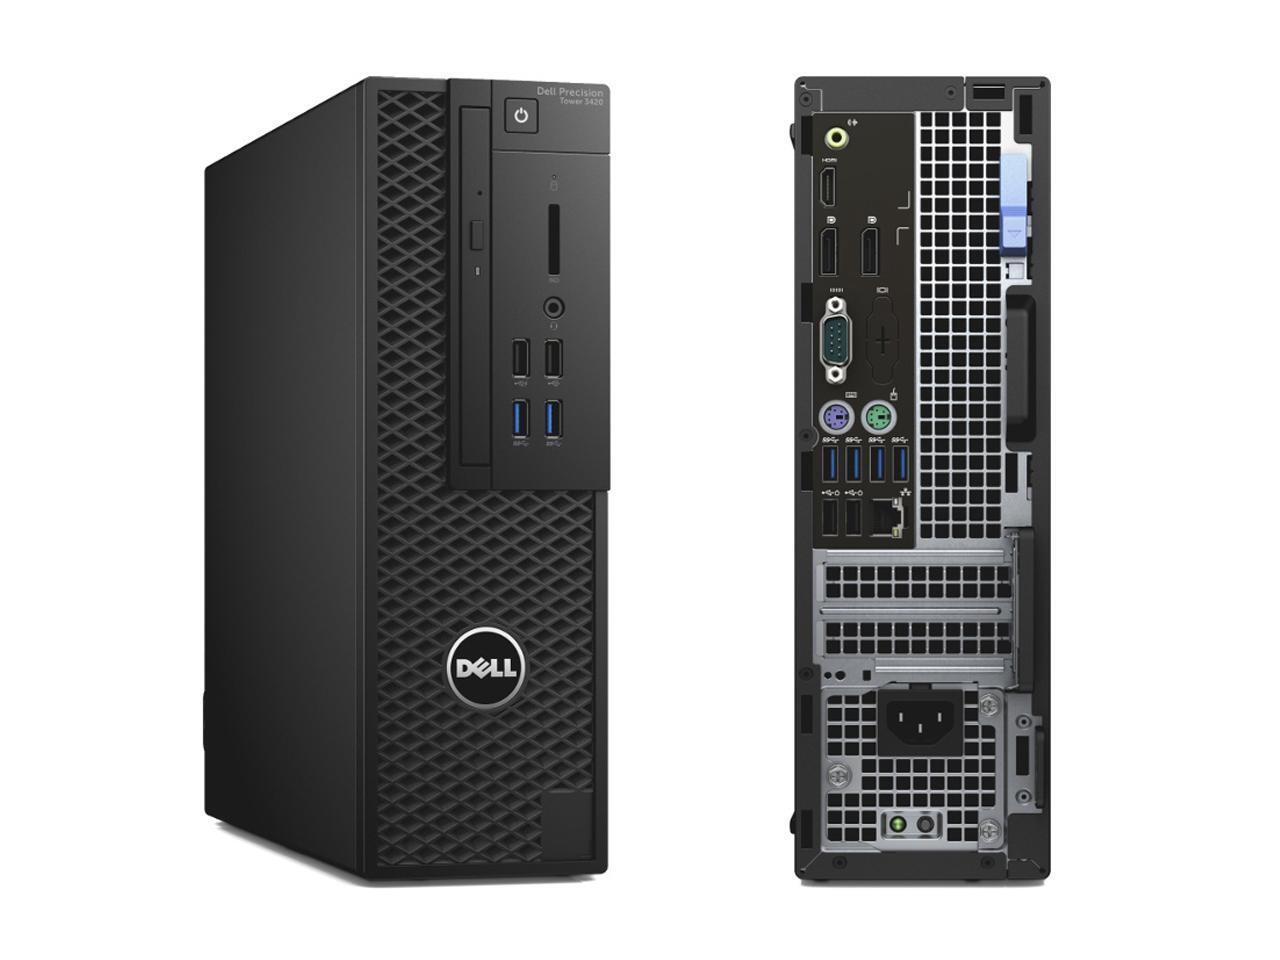 Dell Precision Tower 3420 SFF Intel i7 6700 3.40GHz 8GB RAM 500GB SSD Win 10 Full Size Image